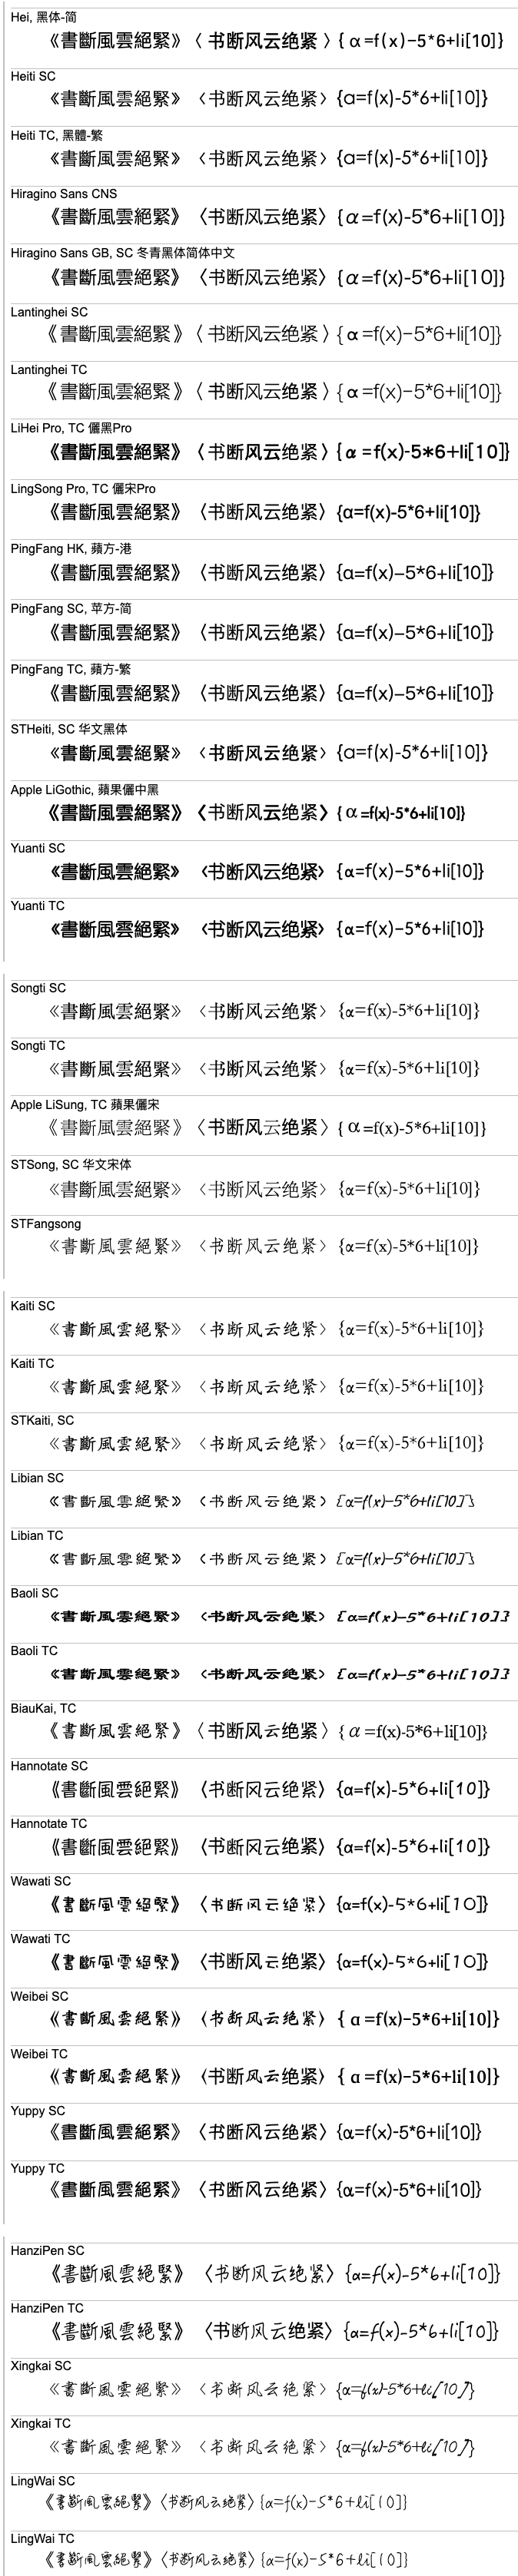 Chinese Font on Mac 2020-10-13 VCm8m